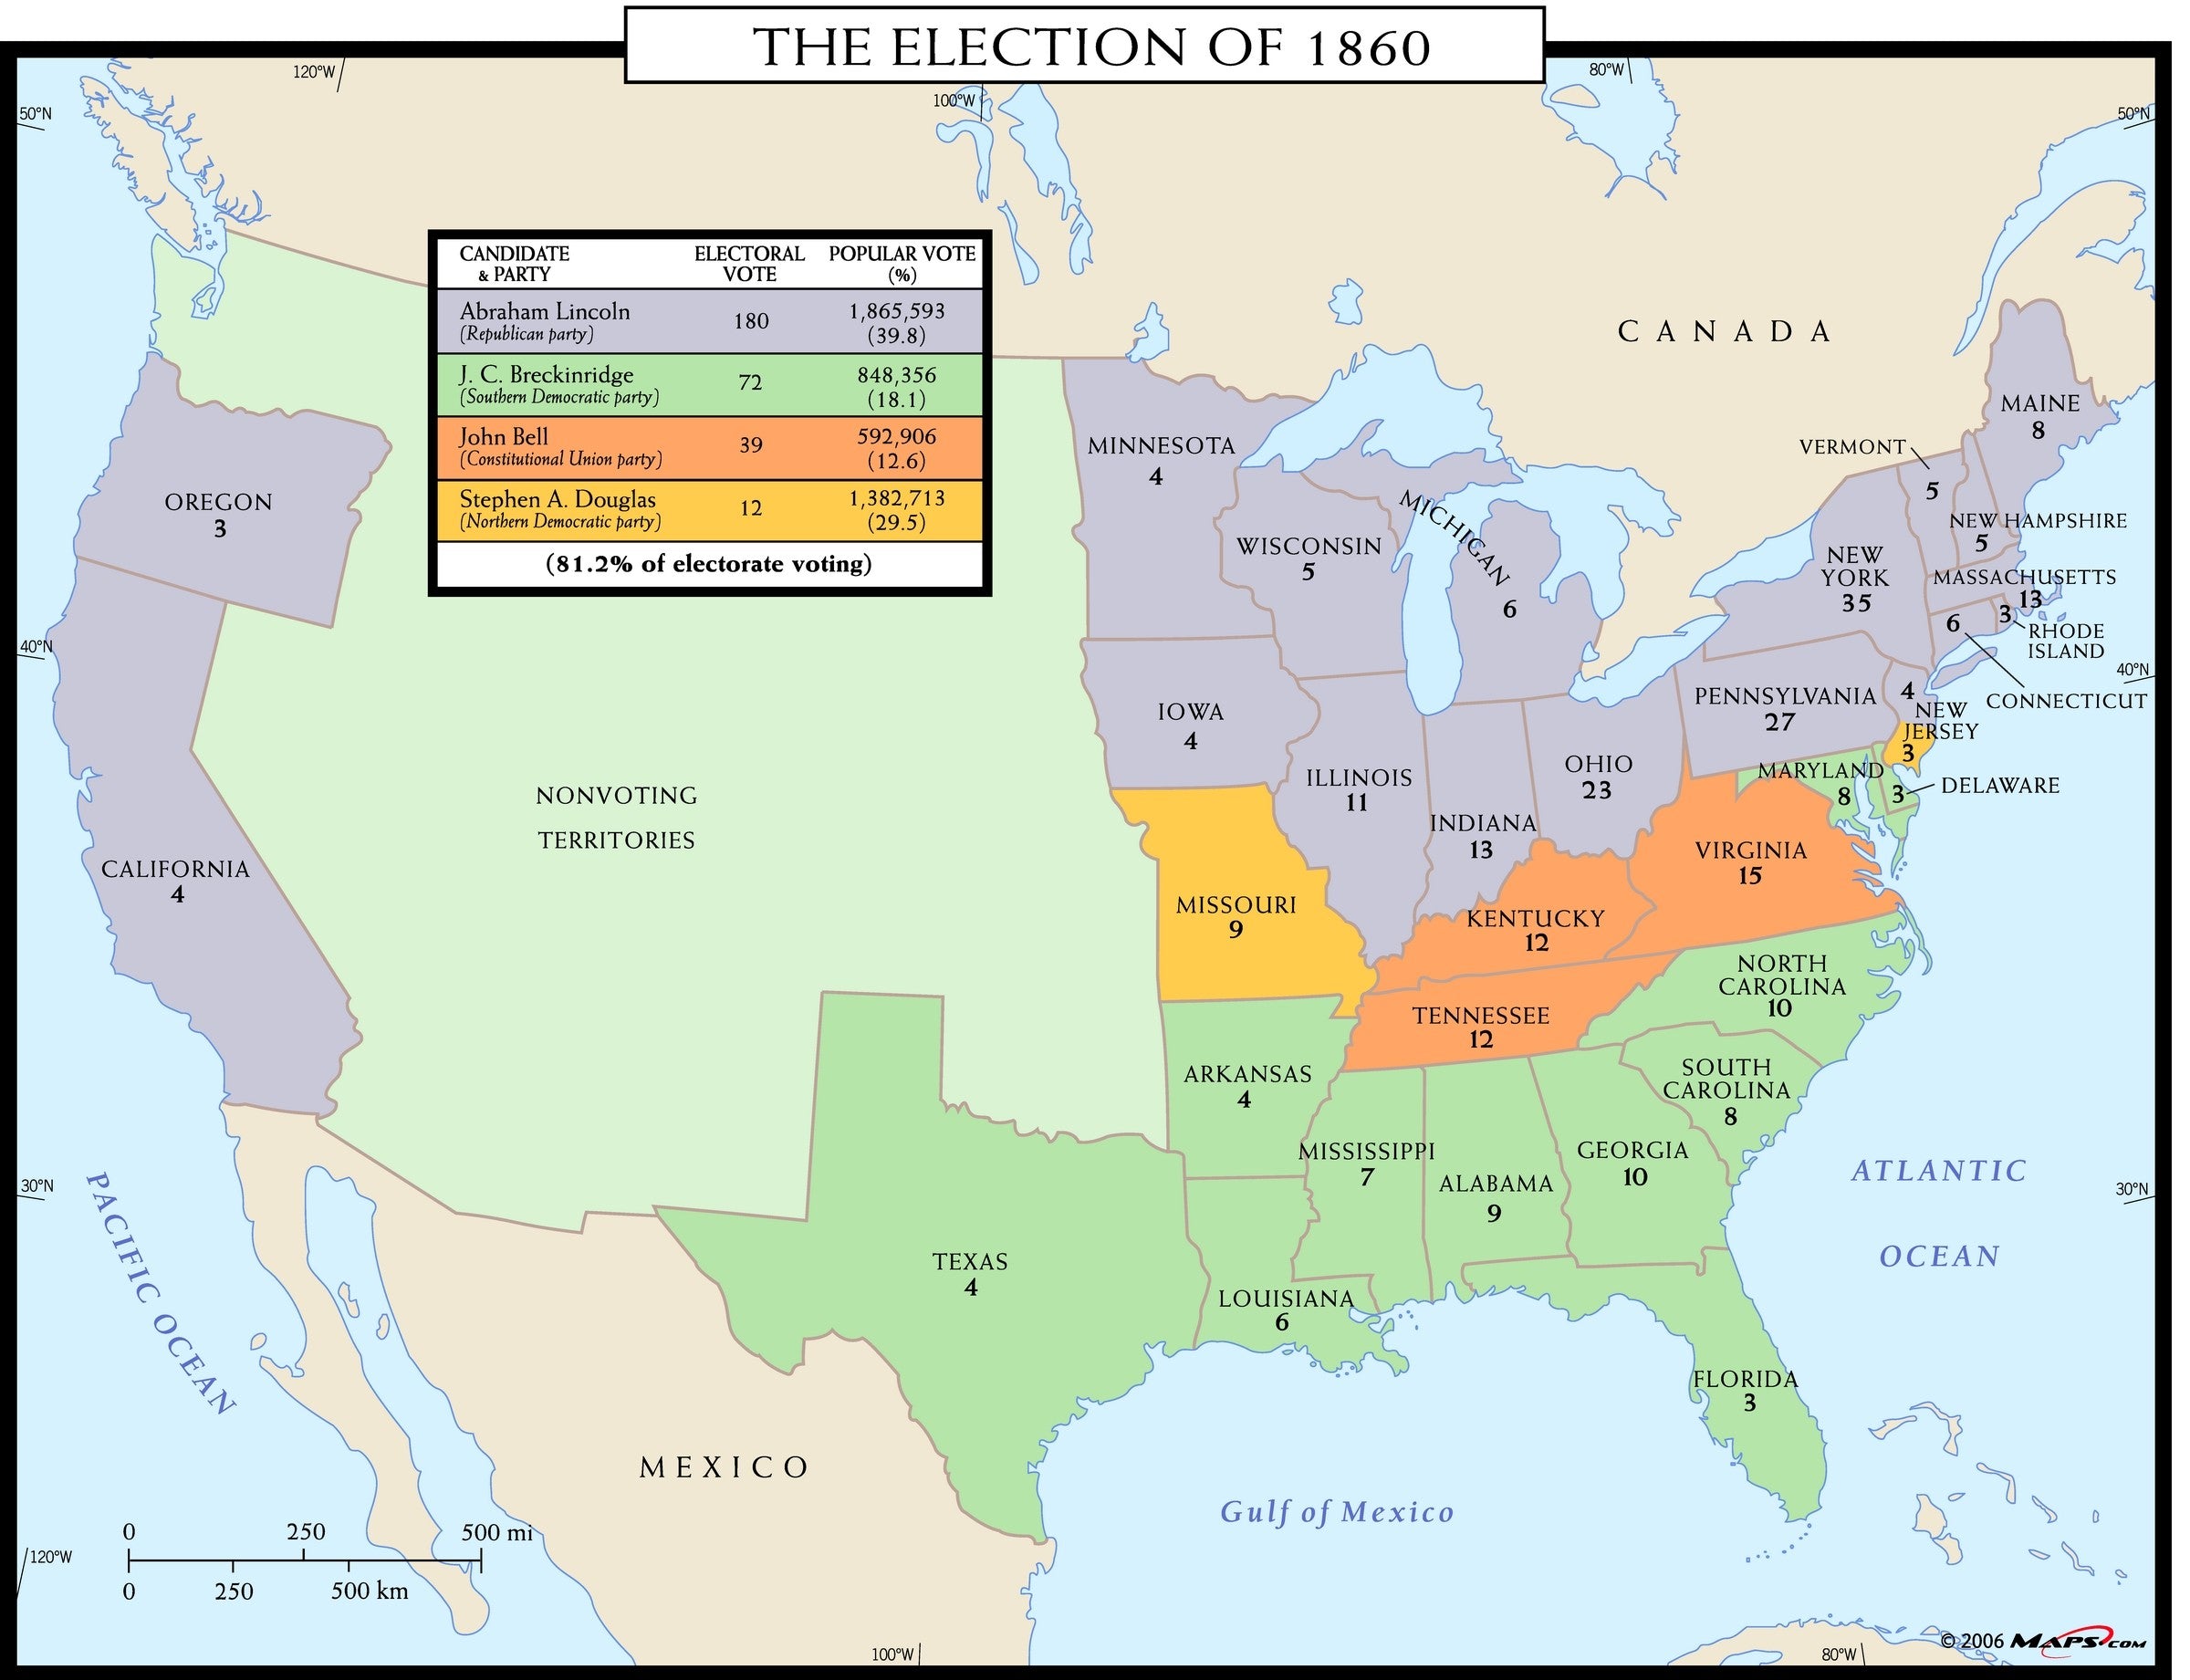 1860 Political Map